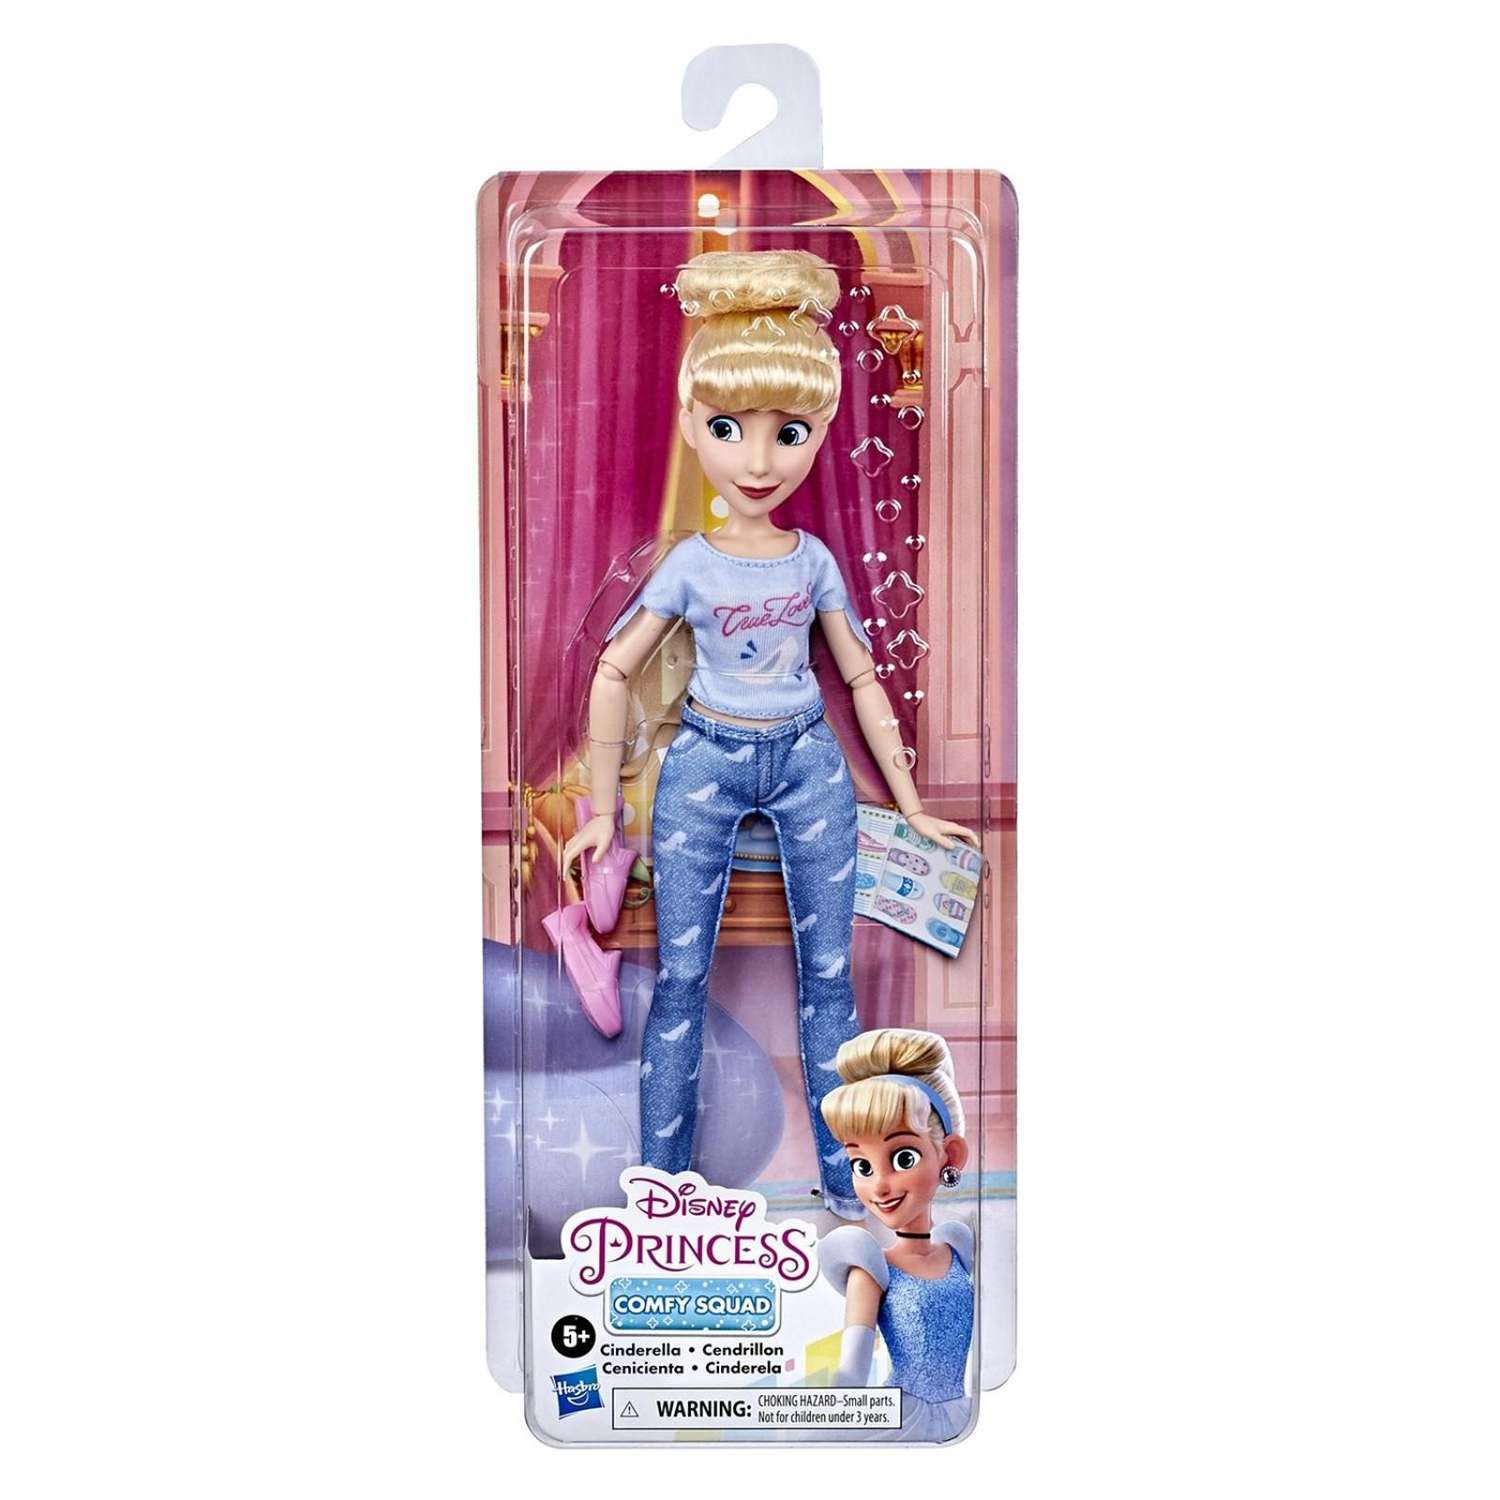 Кукла Hasbro принцесса Дисней Комфи Золушка 5503943 - фото 2